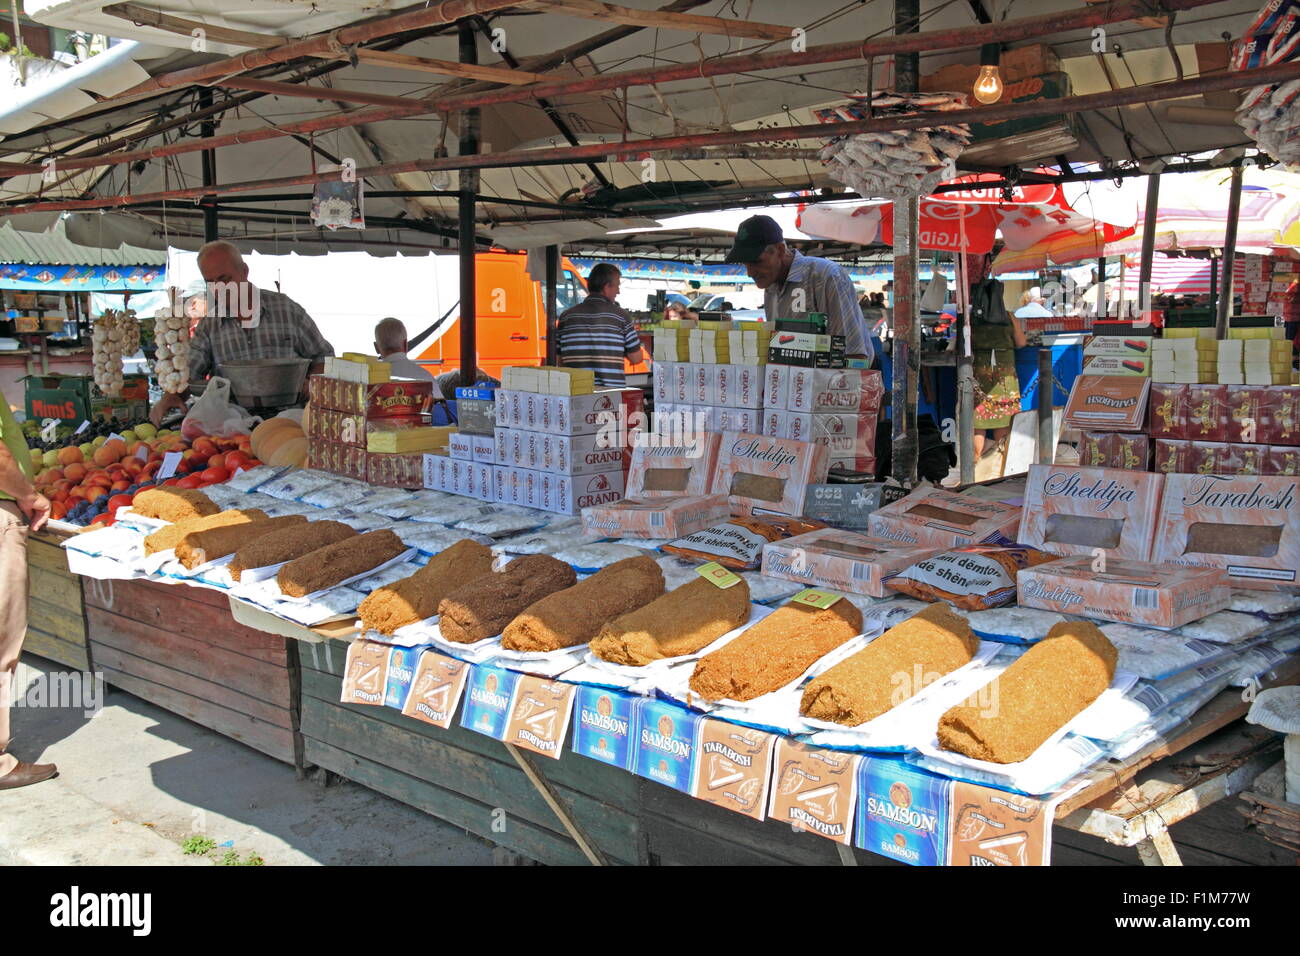 Tobacco at Central Market (aka New Market), Sheshi Avni Rustemi, Tirana, Albania, Balkans, Europe Stock Photo